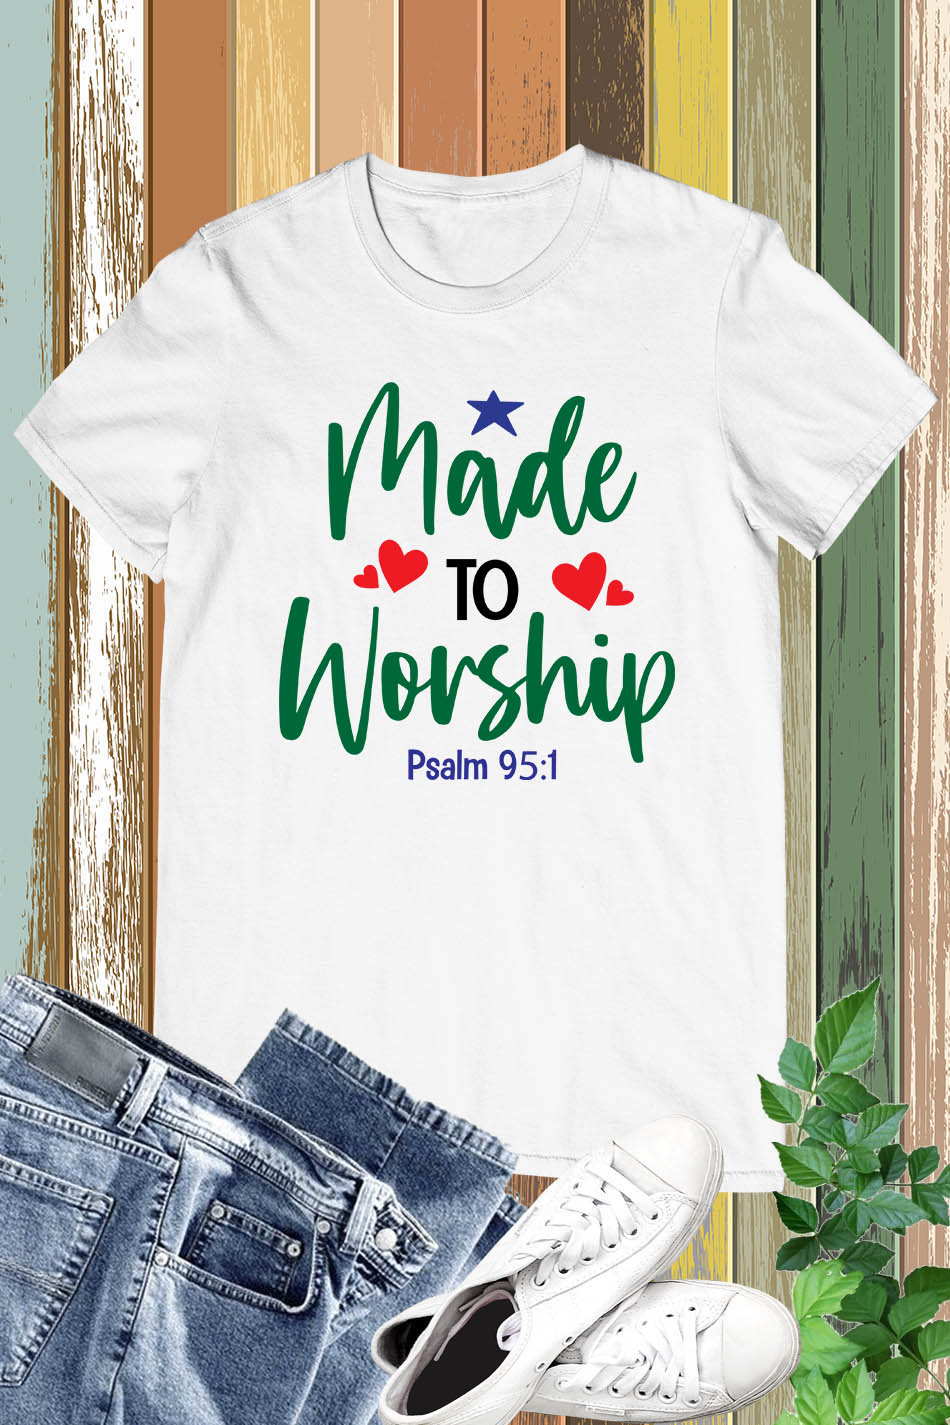 Made to Worship Psalm 95:1 Shirt